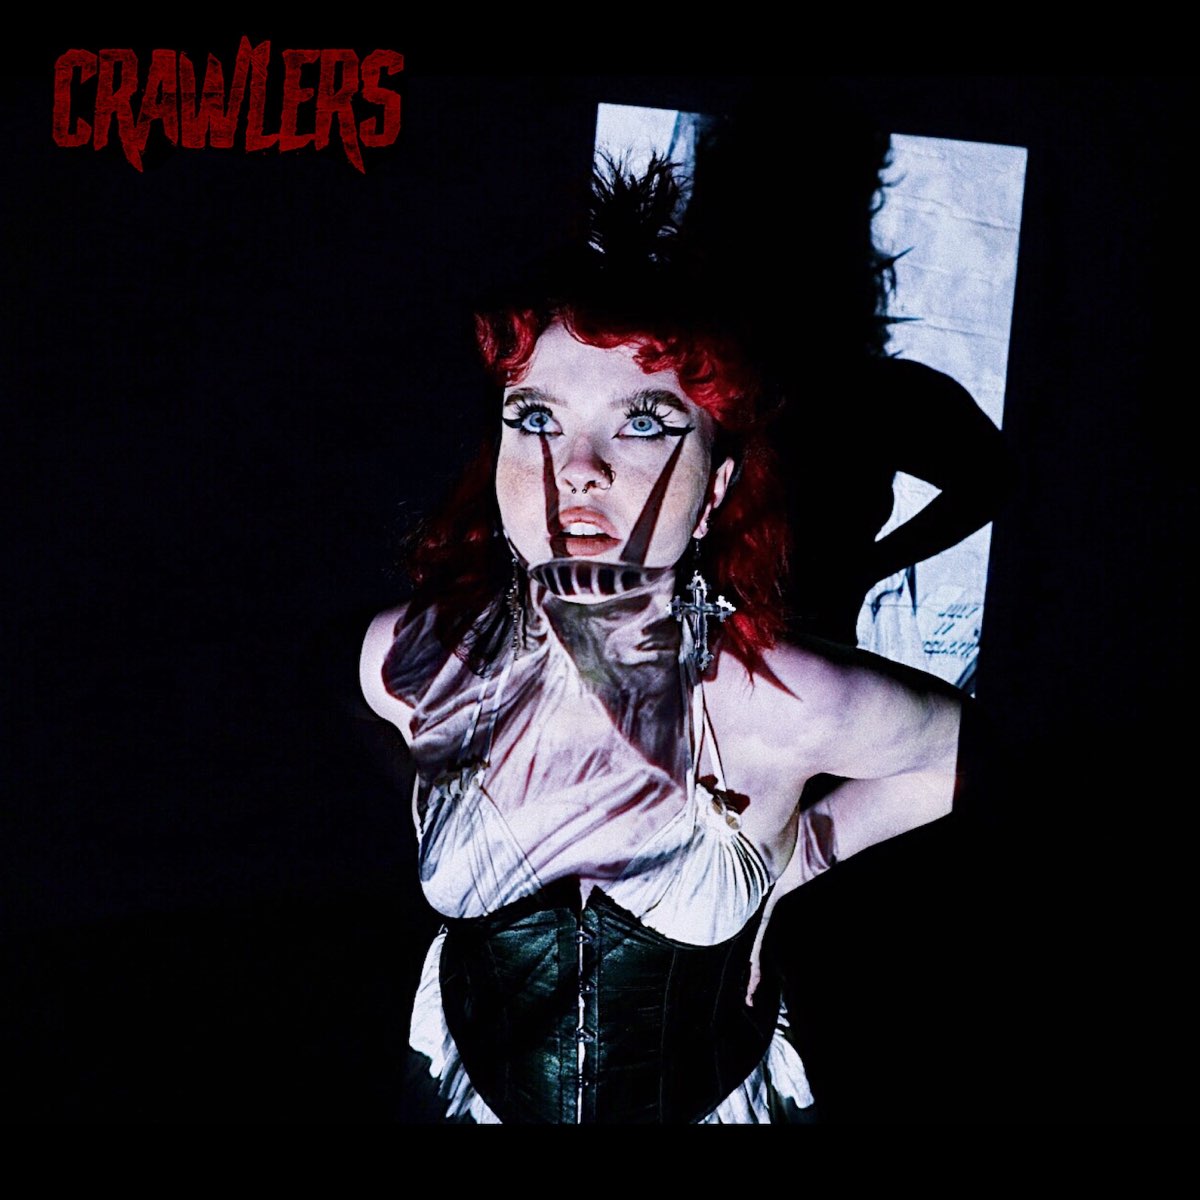 Crawlers — Statues cover artwork